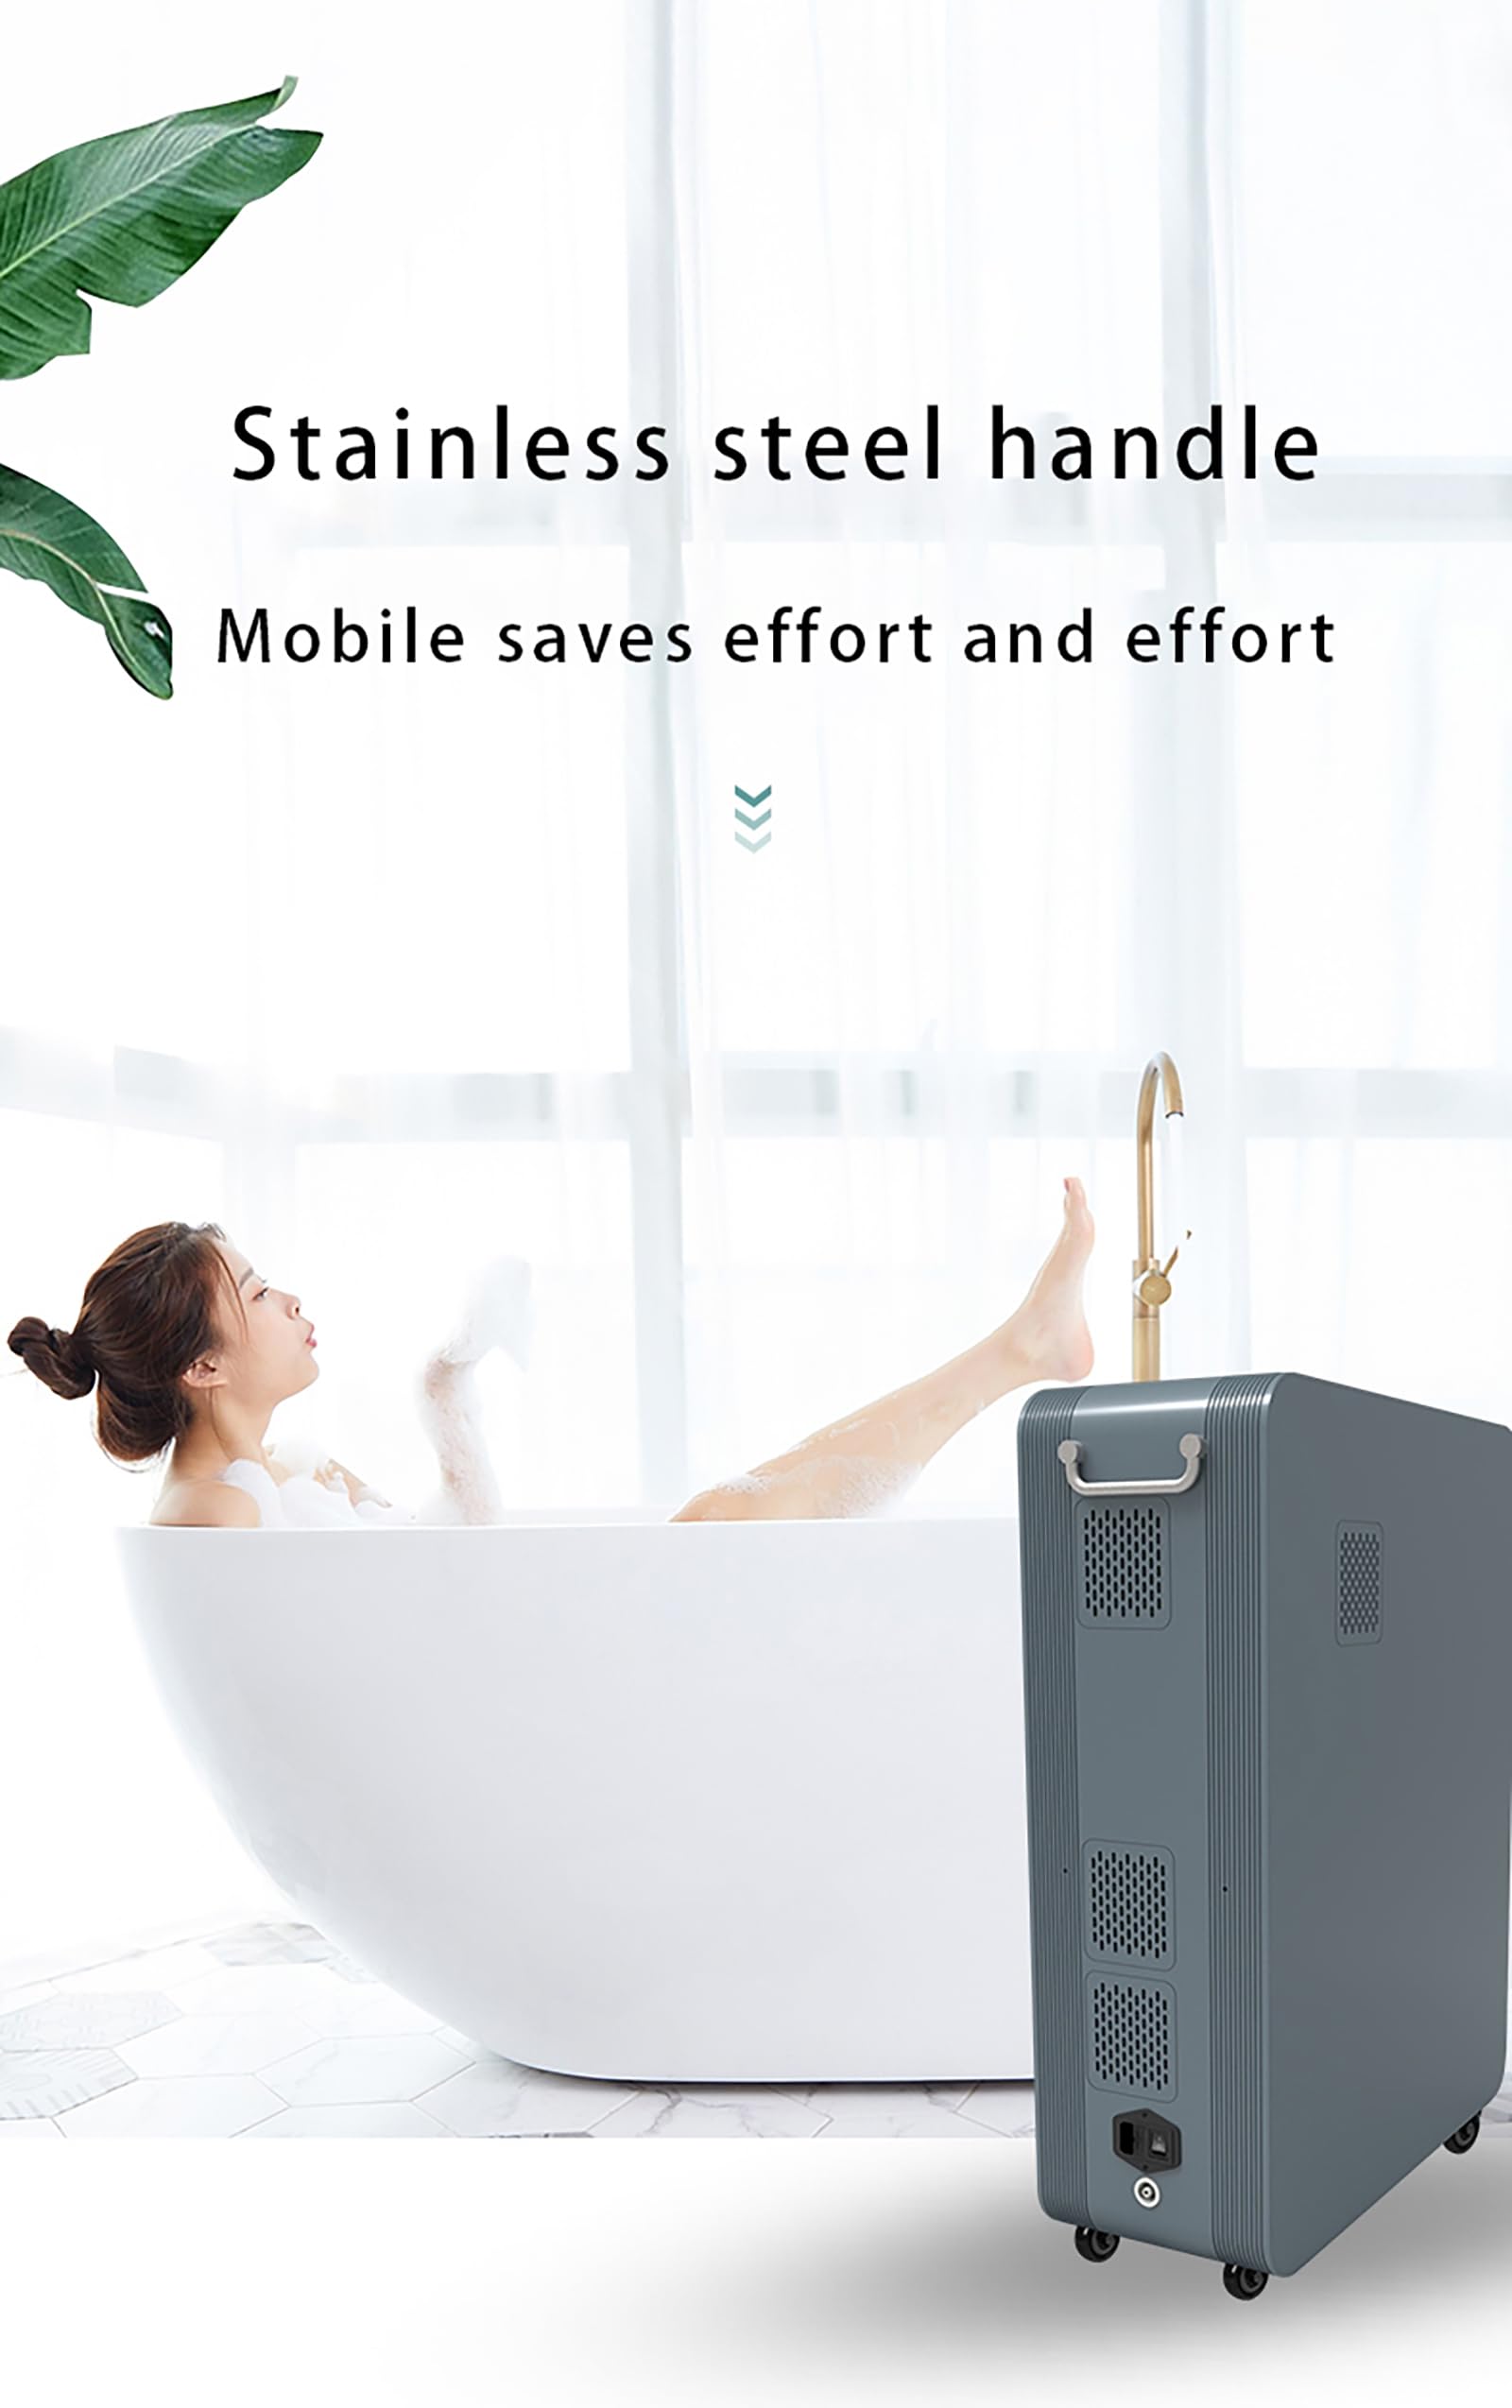 Aniwini Hydrogen Bath Spa Generator, 3500ml/min, 99.99% High Purity H2 Water Bath Machine, Up to 2500PPB, Bubble Bath Machine, for Relieve Fatigue & Enhance Sleep